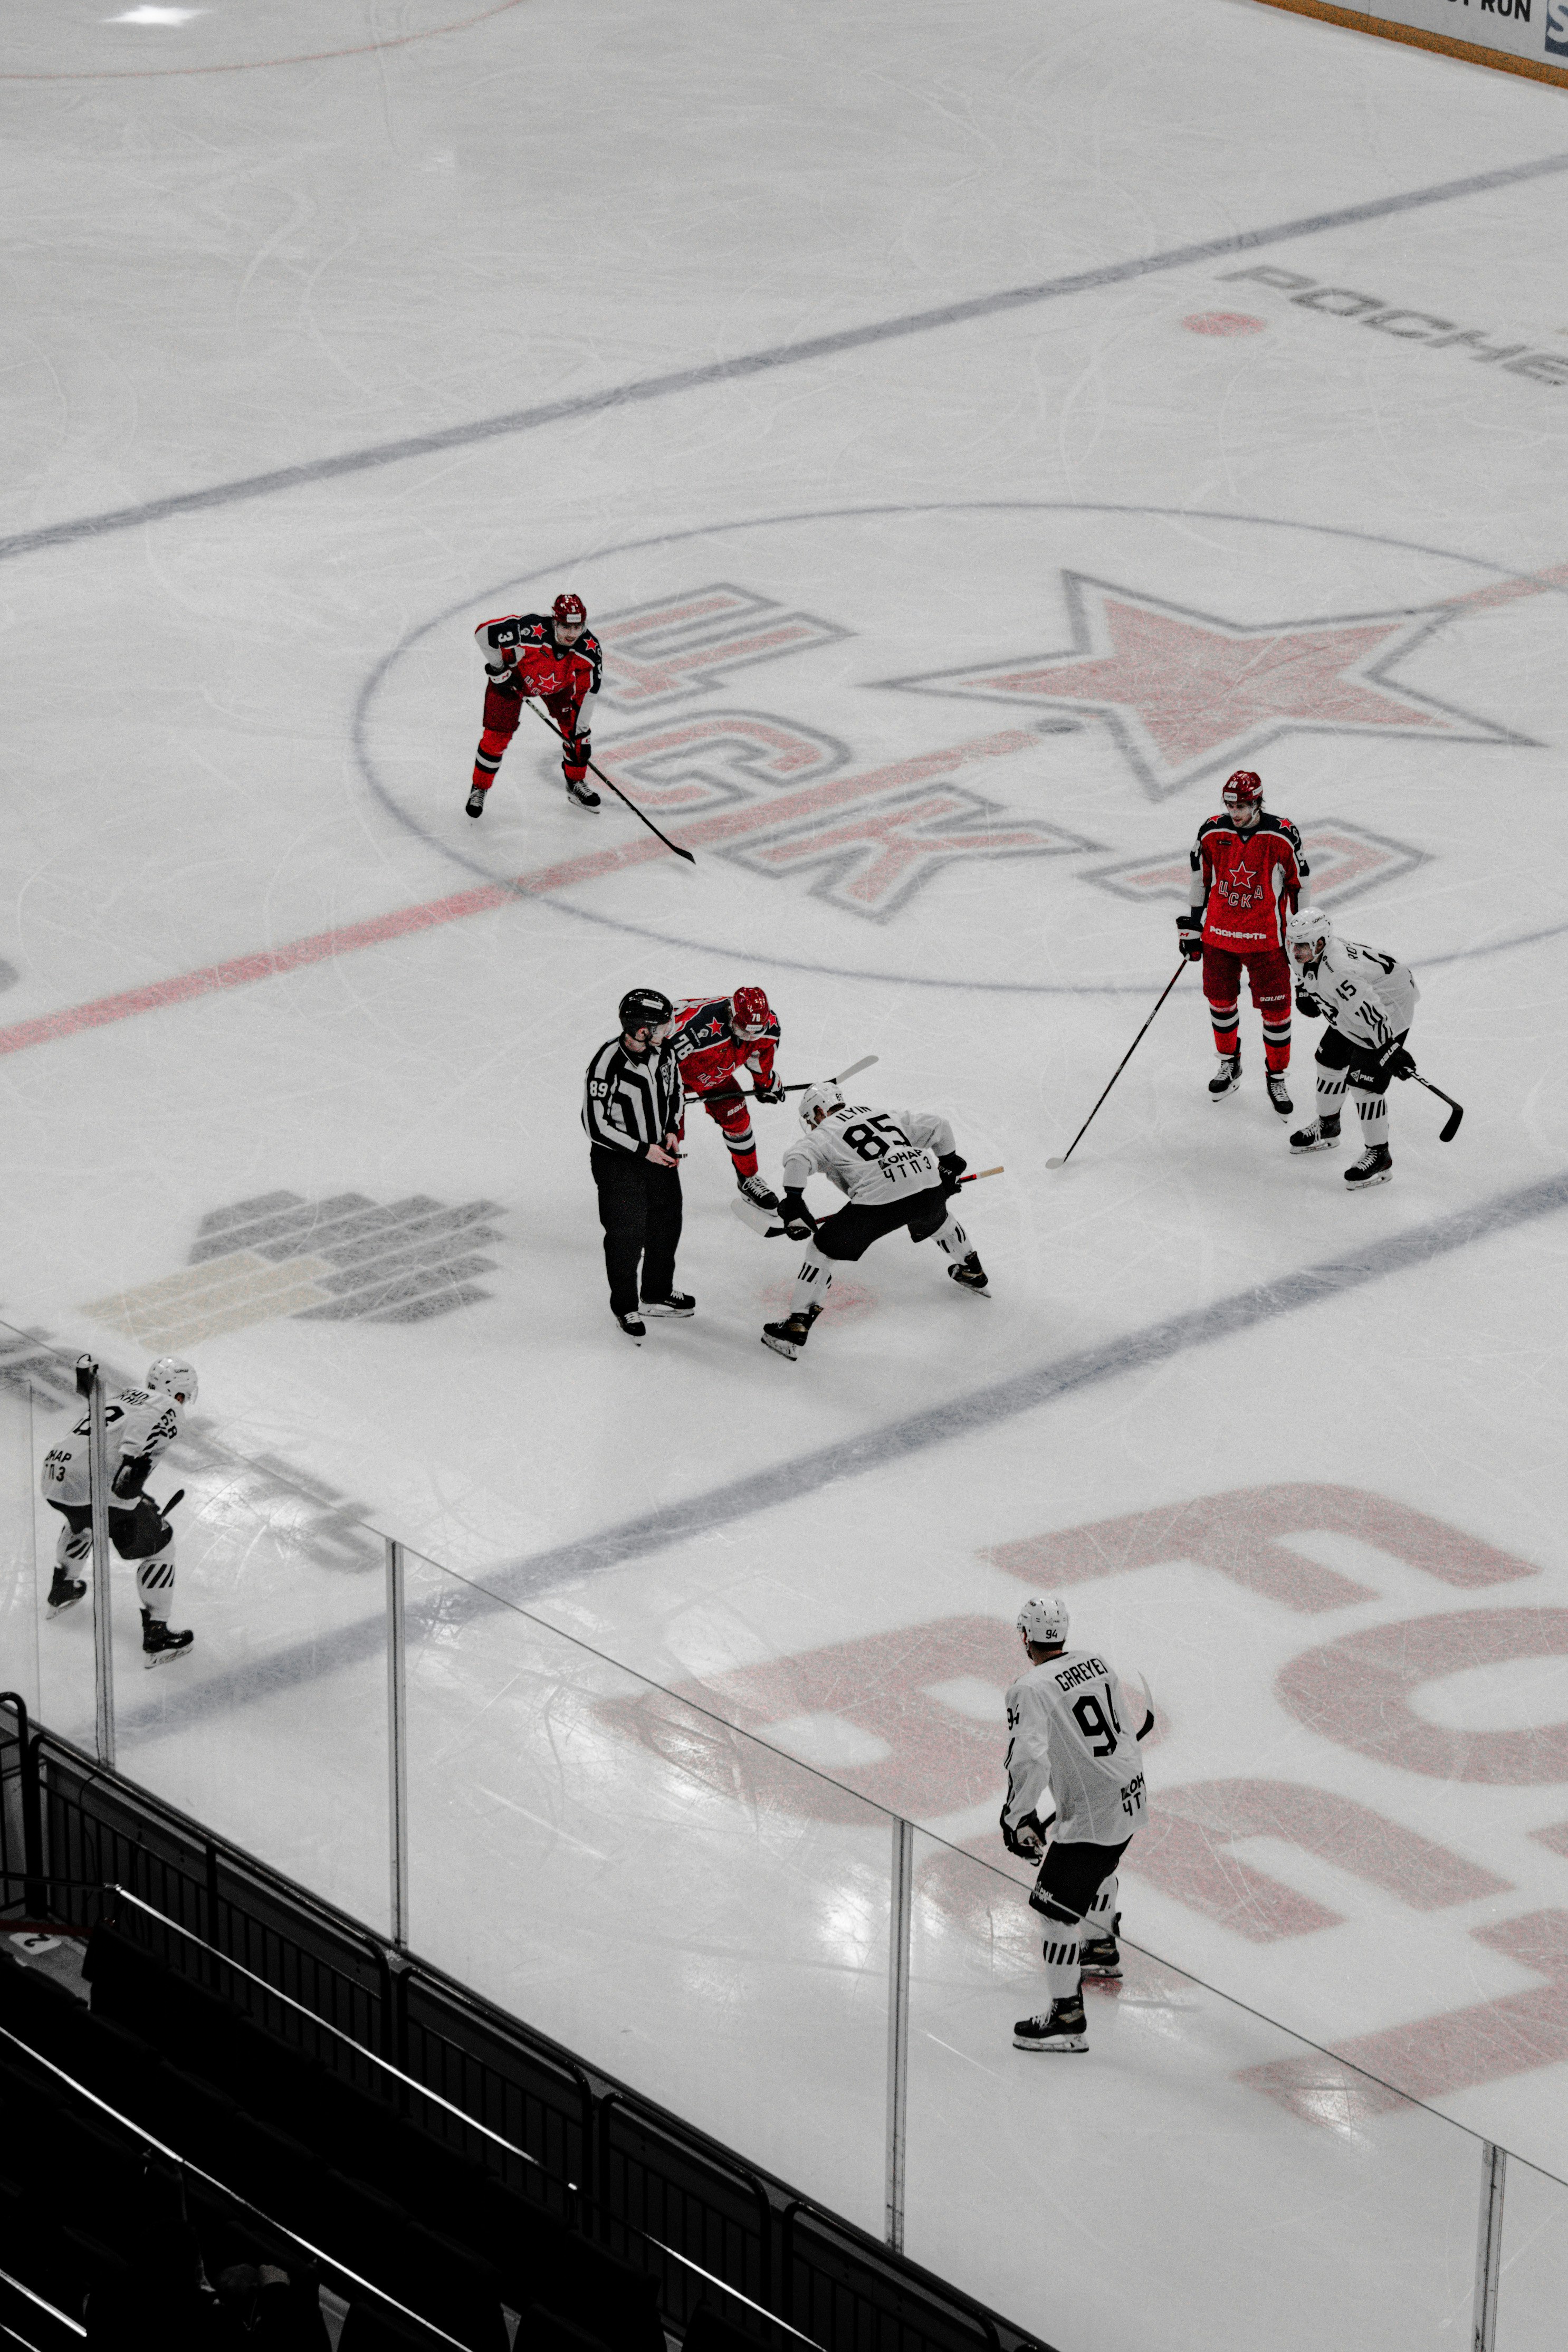 2 men playing hockey on ice field